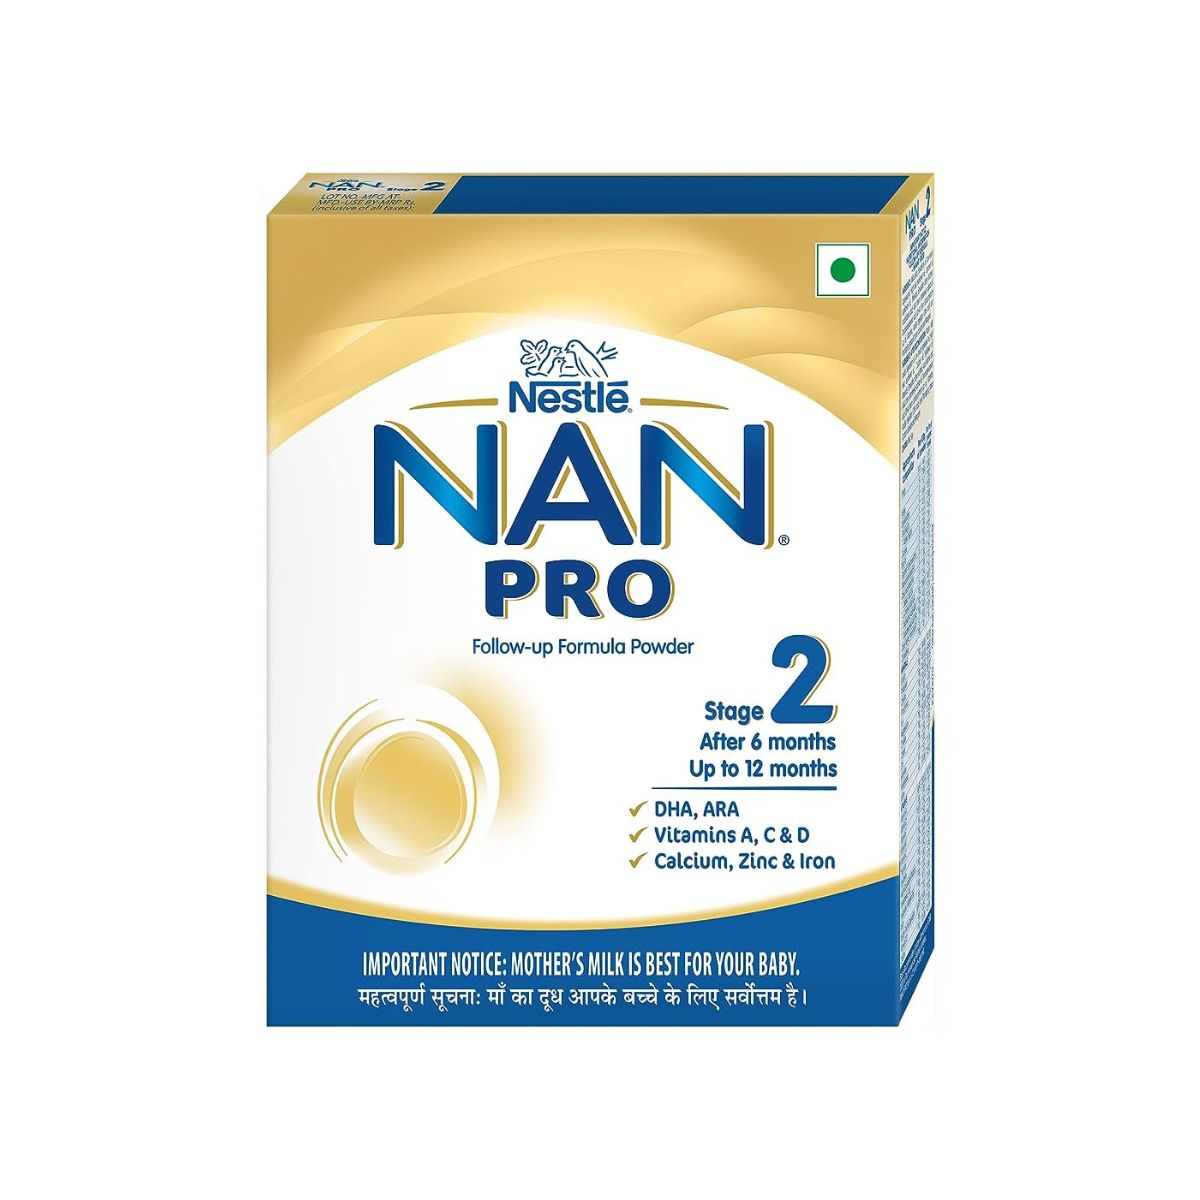 Nestle Nan Pro Stage 2 - After 6 Months Up To 12 Months- Vitamin A, C & D - Calcium , Zinc & Iron - 400g